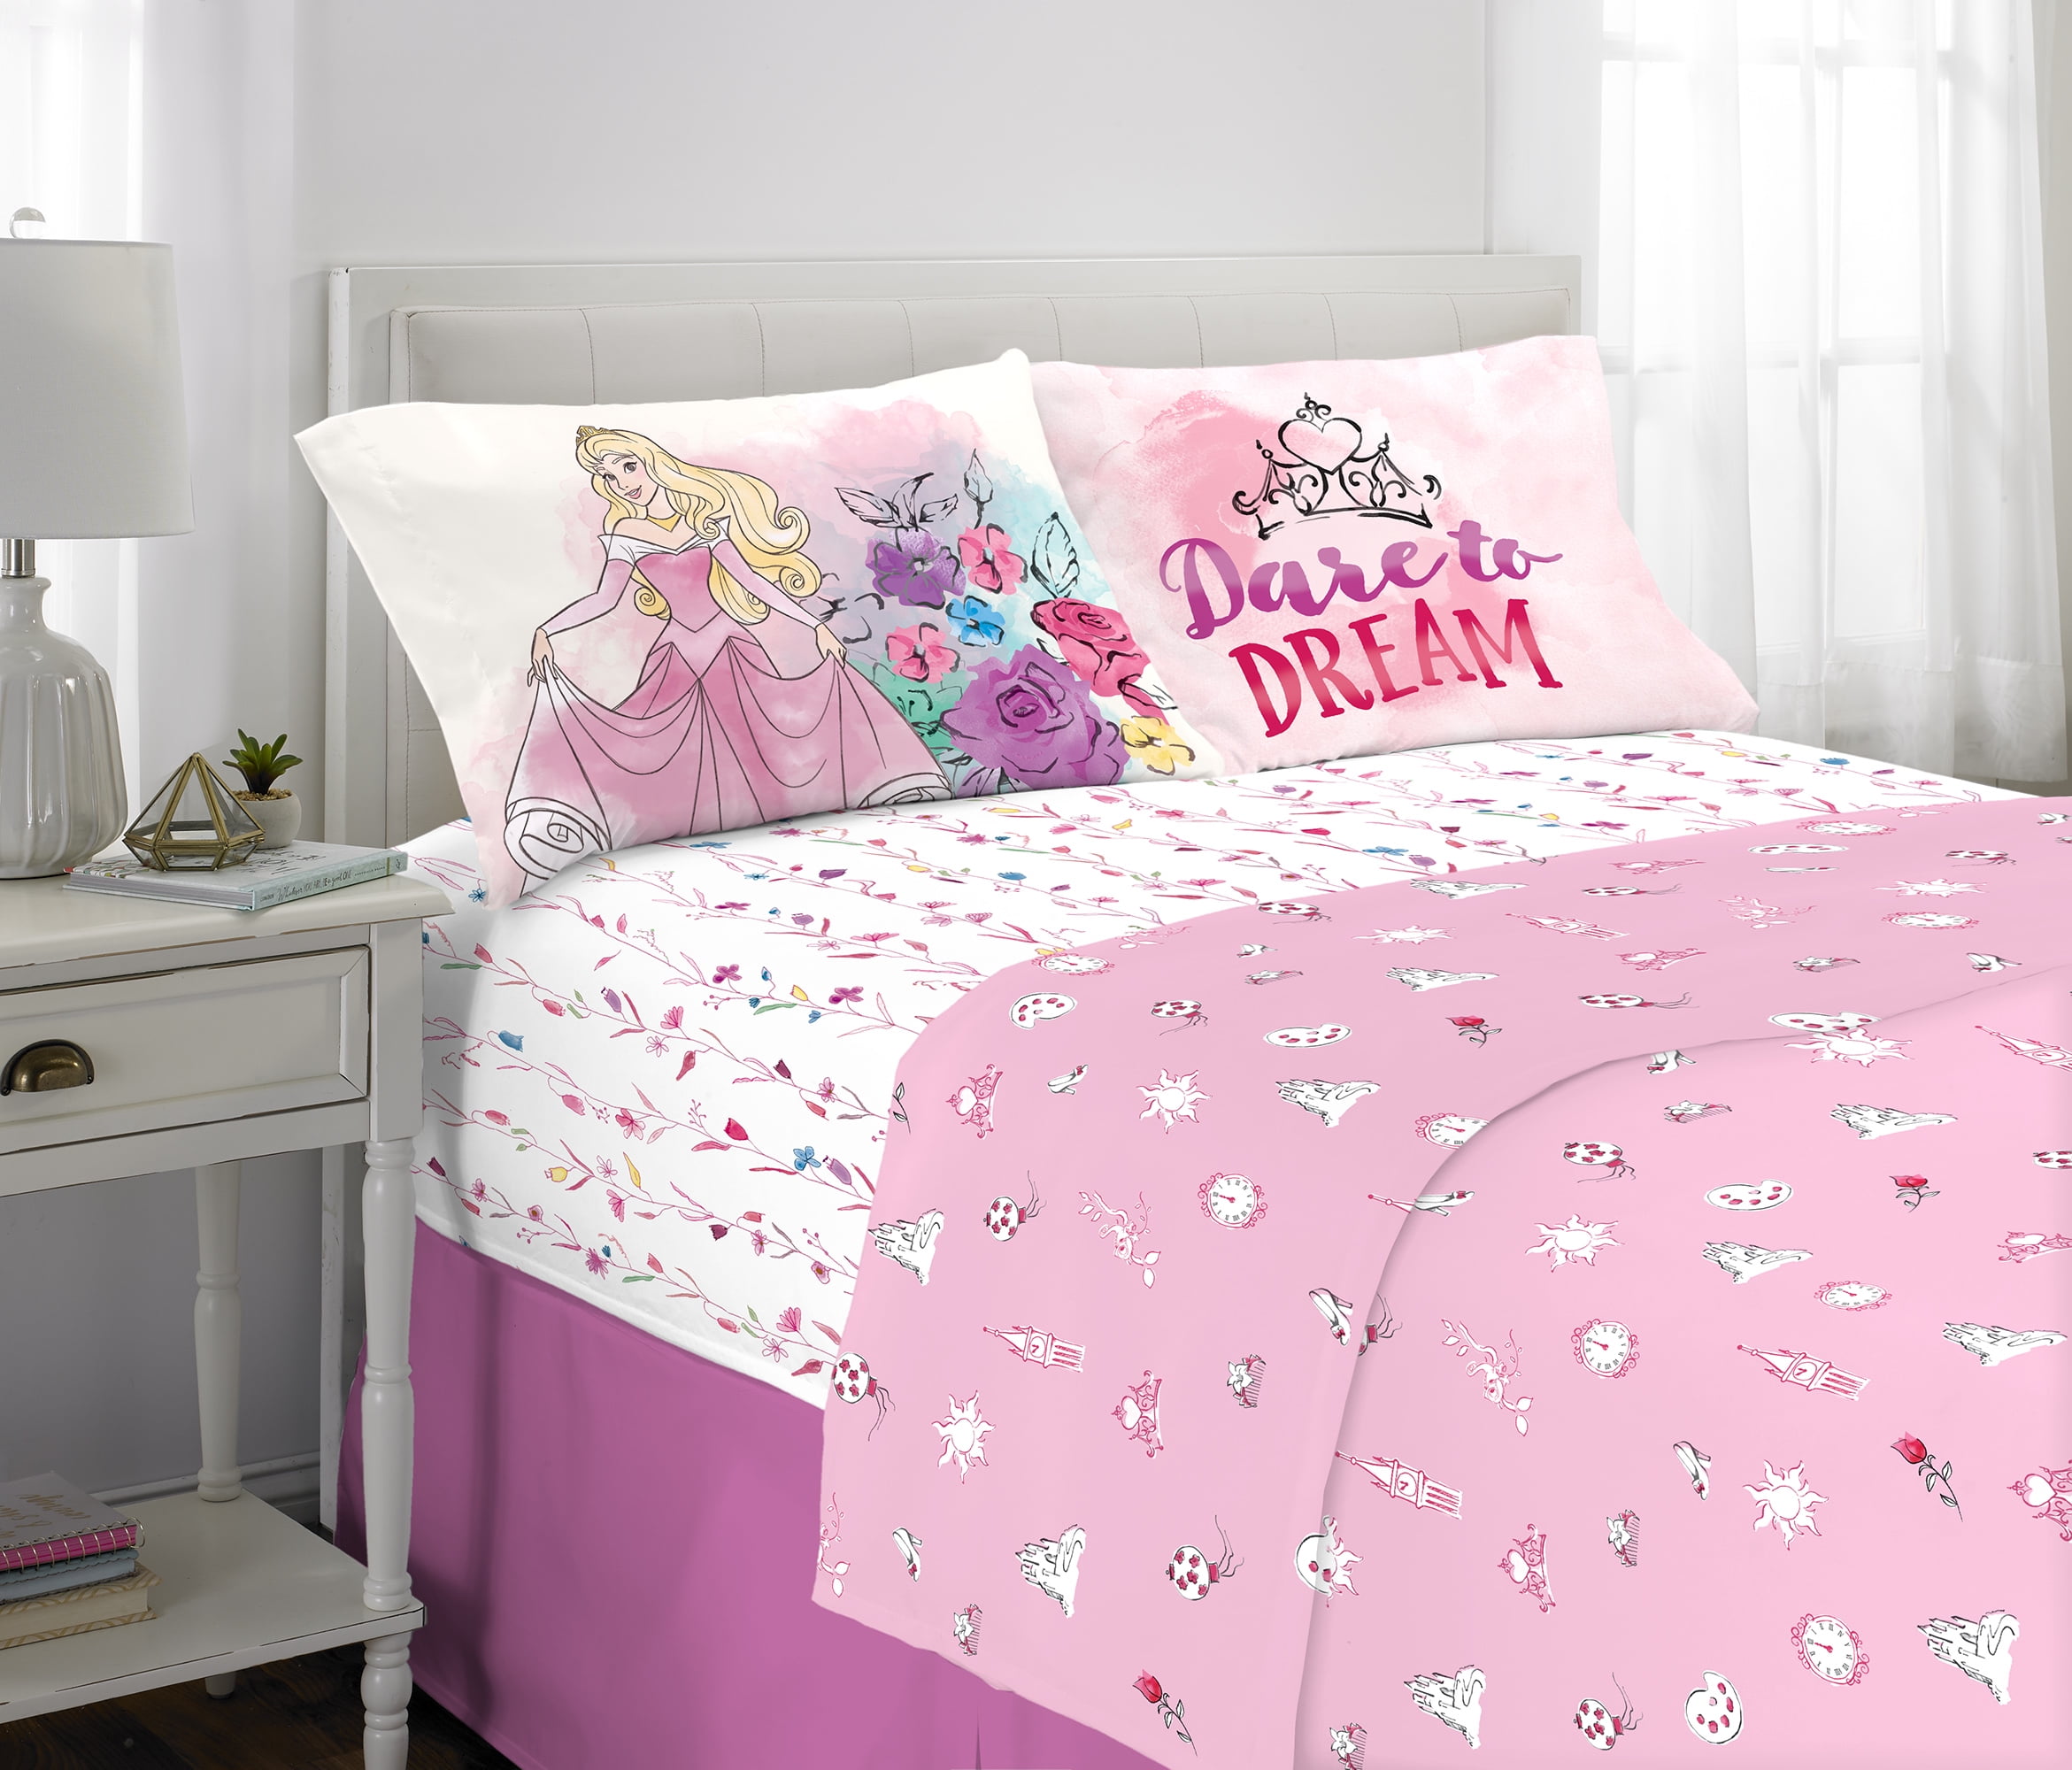 Disney Princess 'Encahnting' Junior Bed Bundle Set Polyester-Cotton Single Multi-Colour